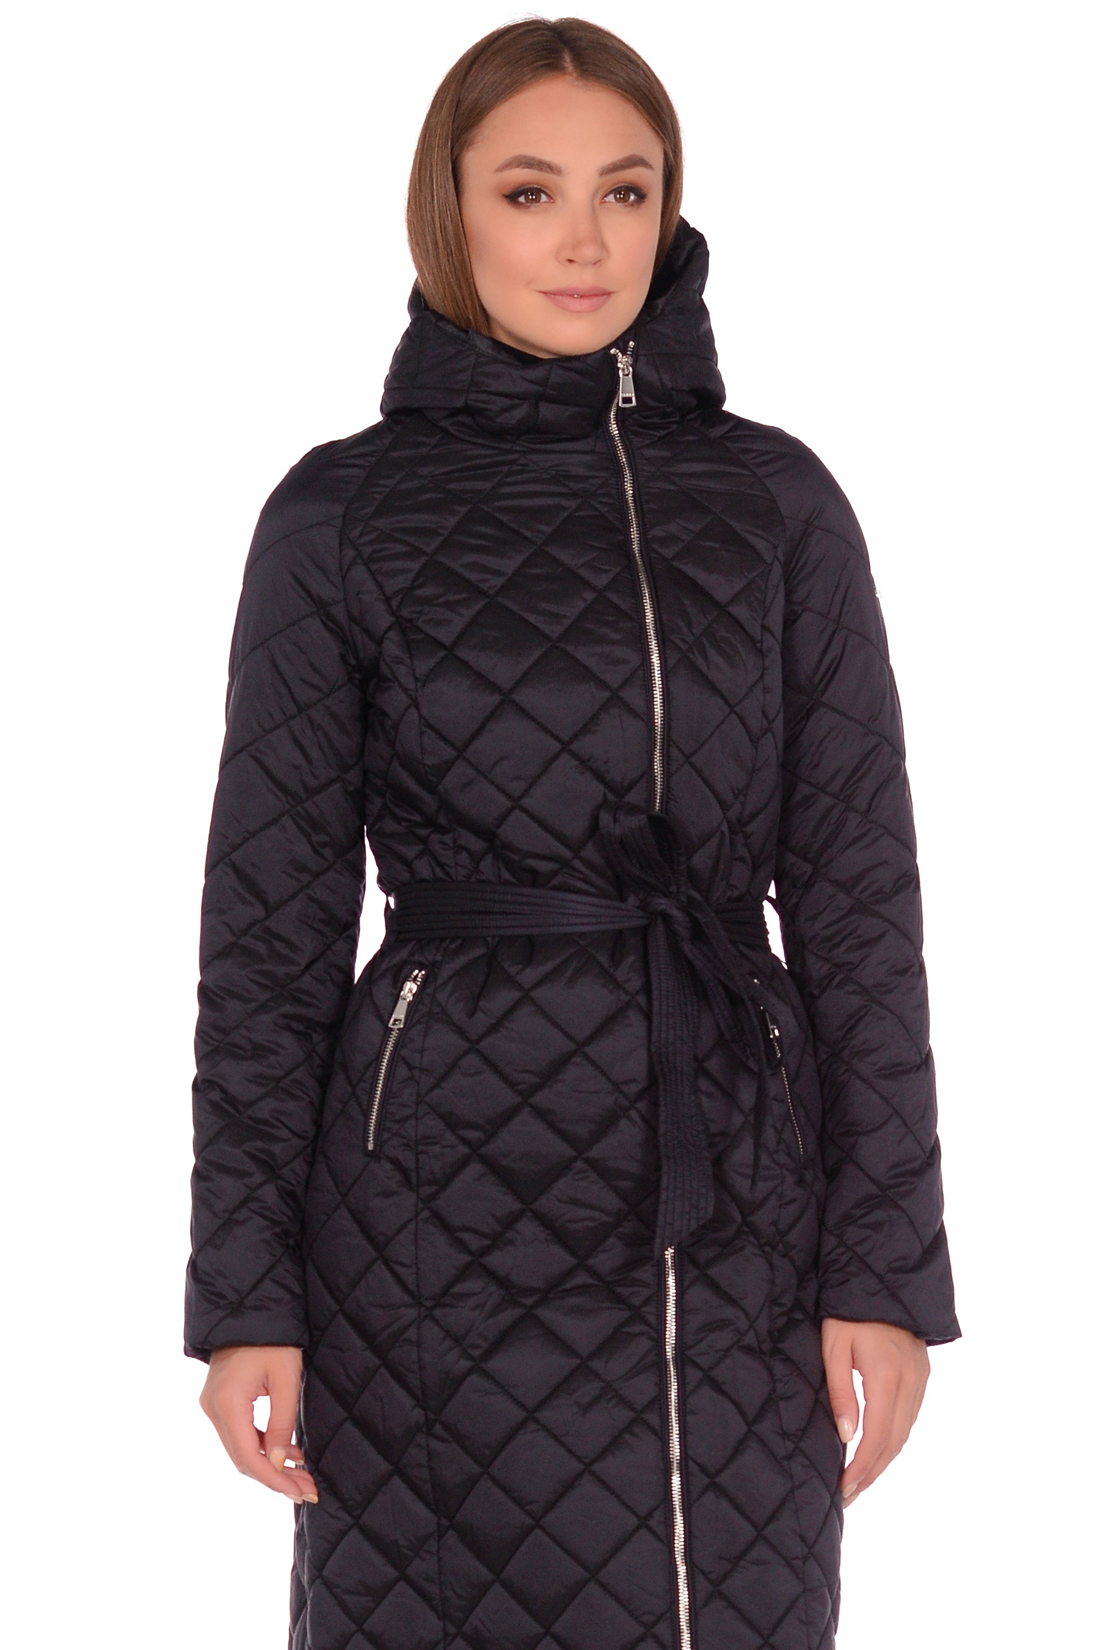 Длинная стёганая куртка (арт. baon B038547), размер L, цвет черный Длинная стёганая куртка (арт. baon B038547) - фото 5